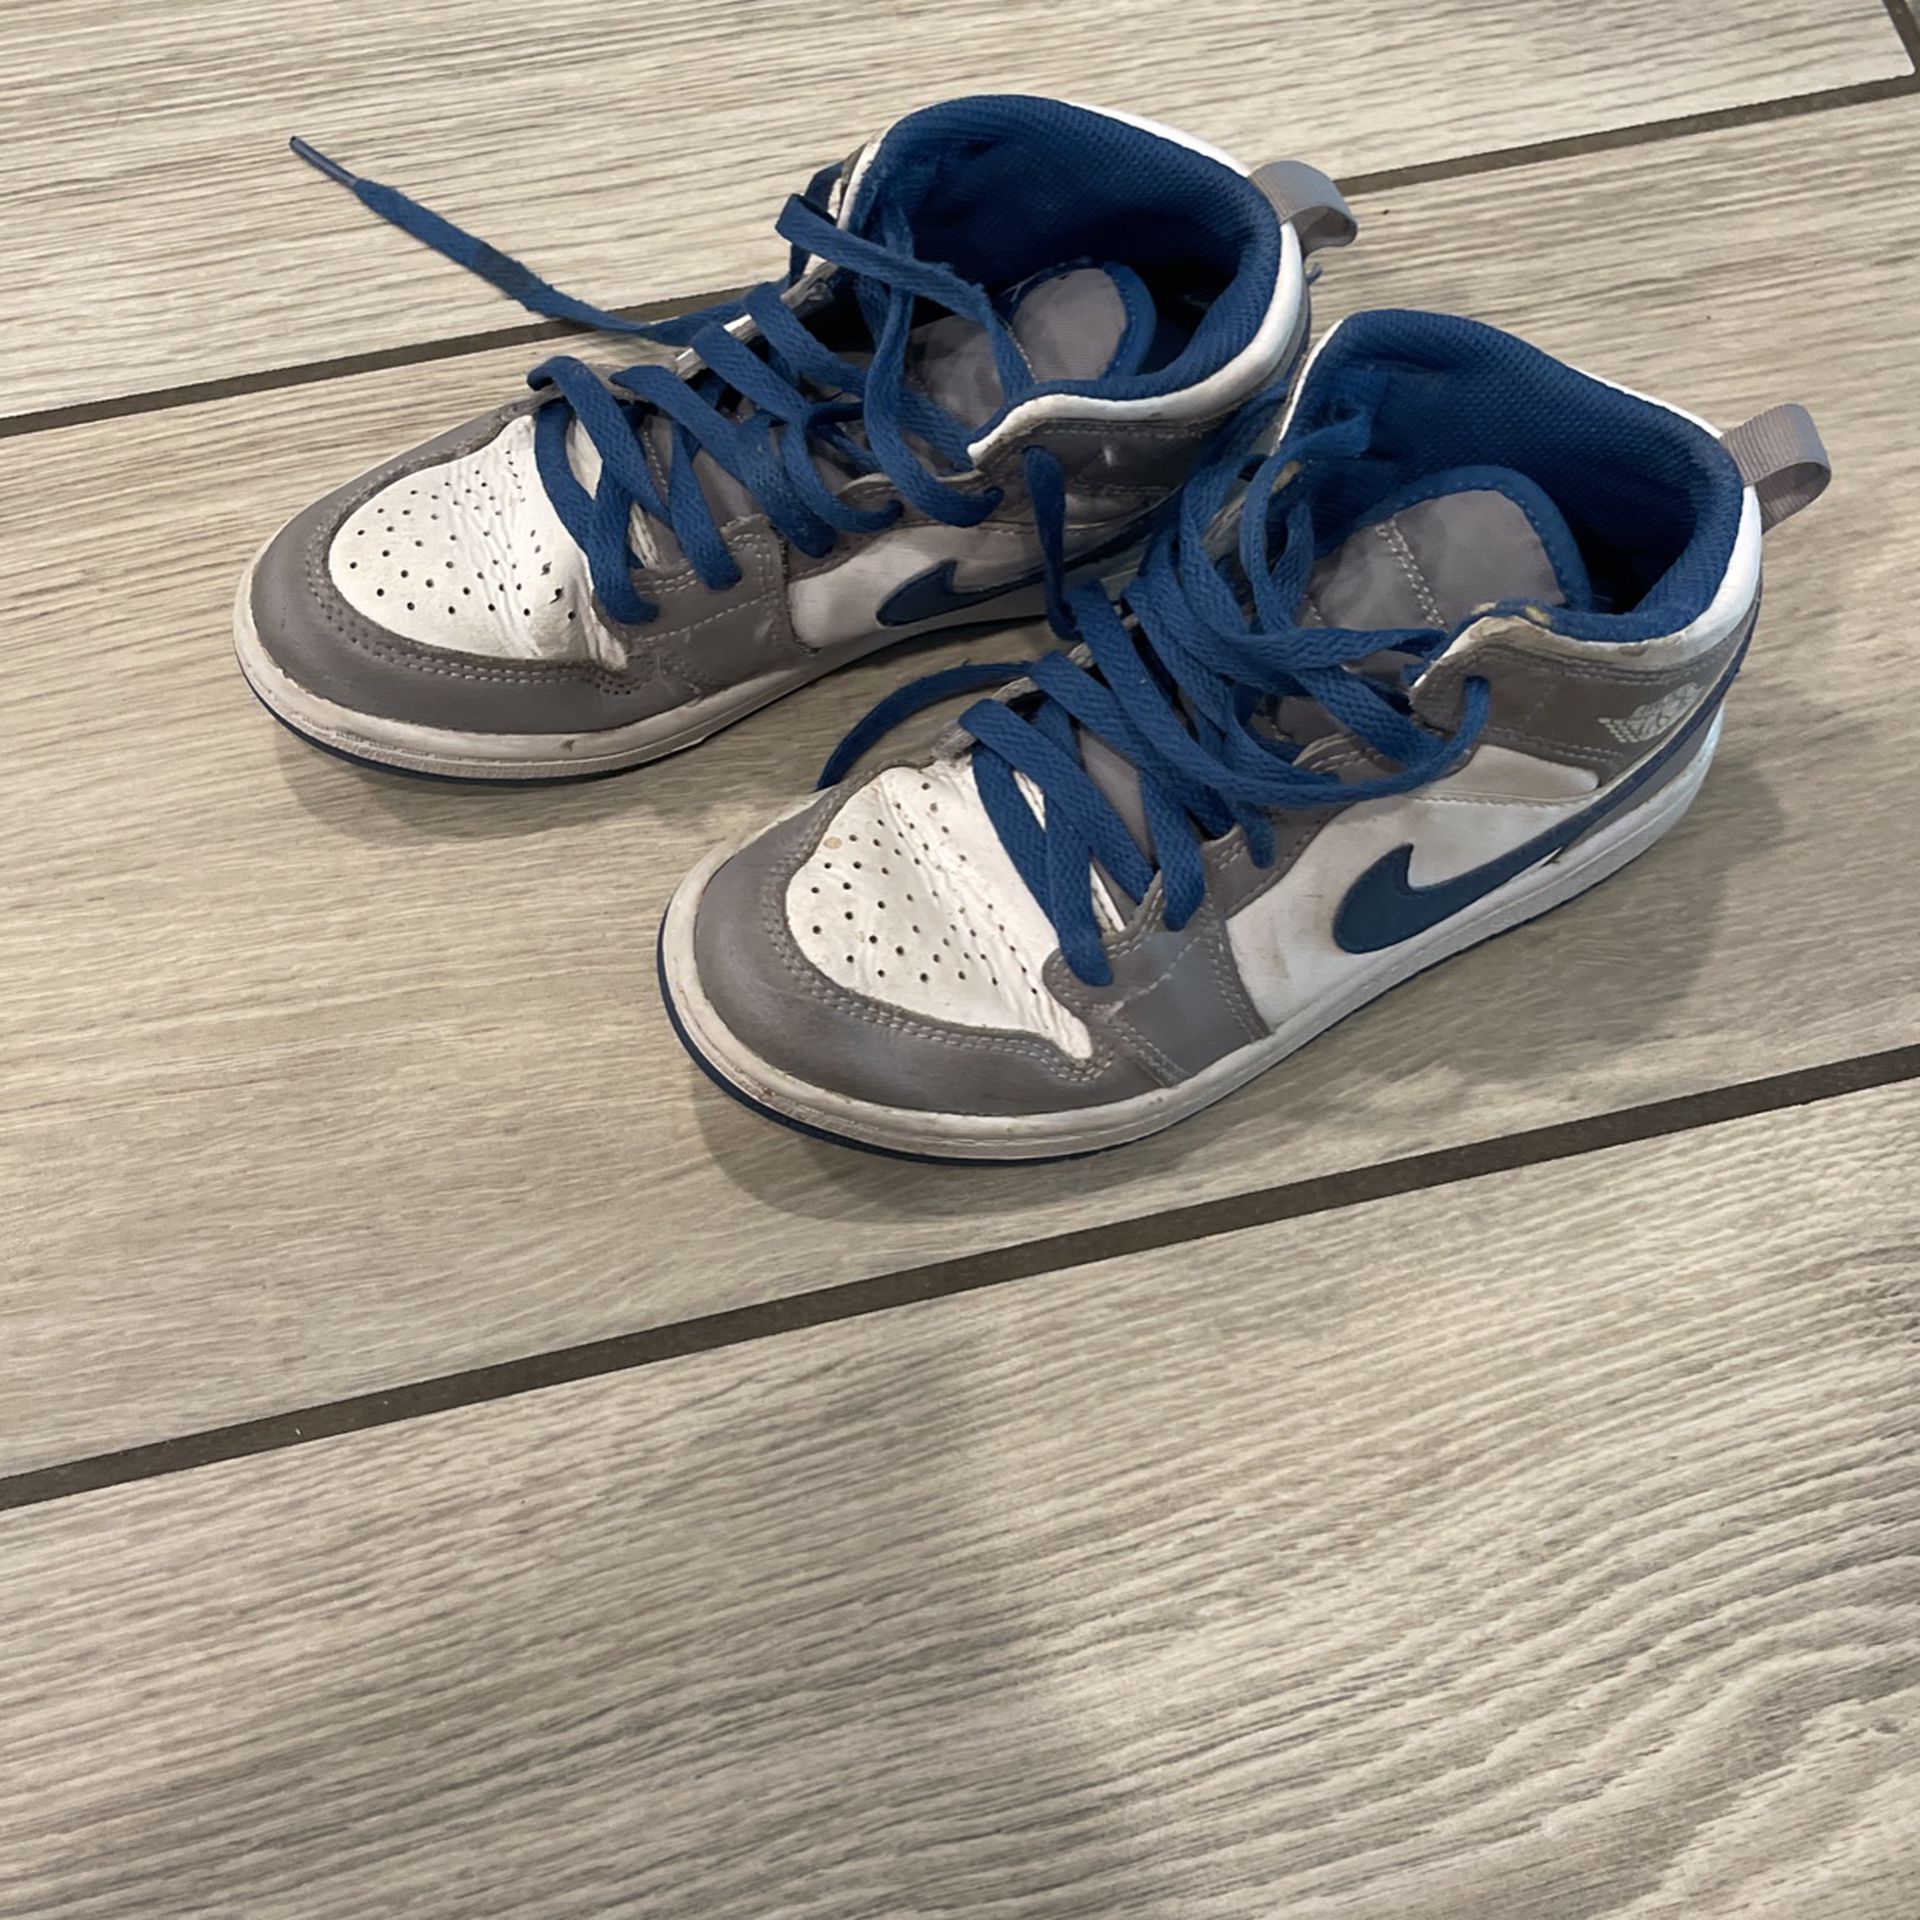 Boys Nike Shoes Size 2.5